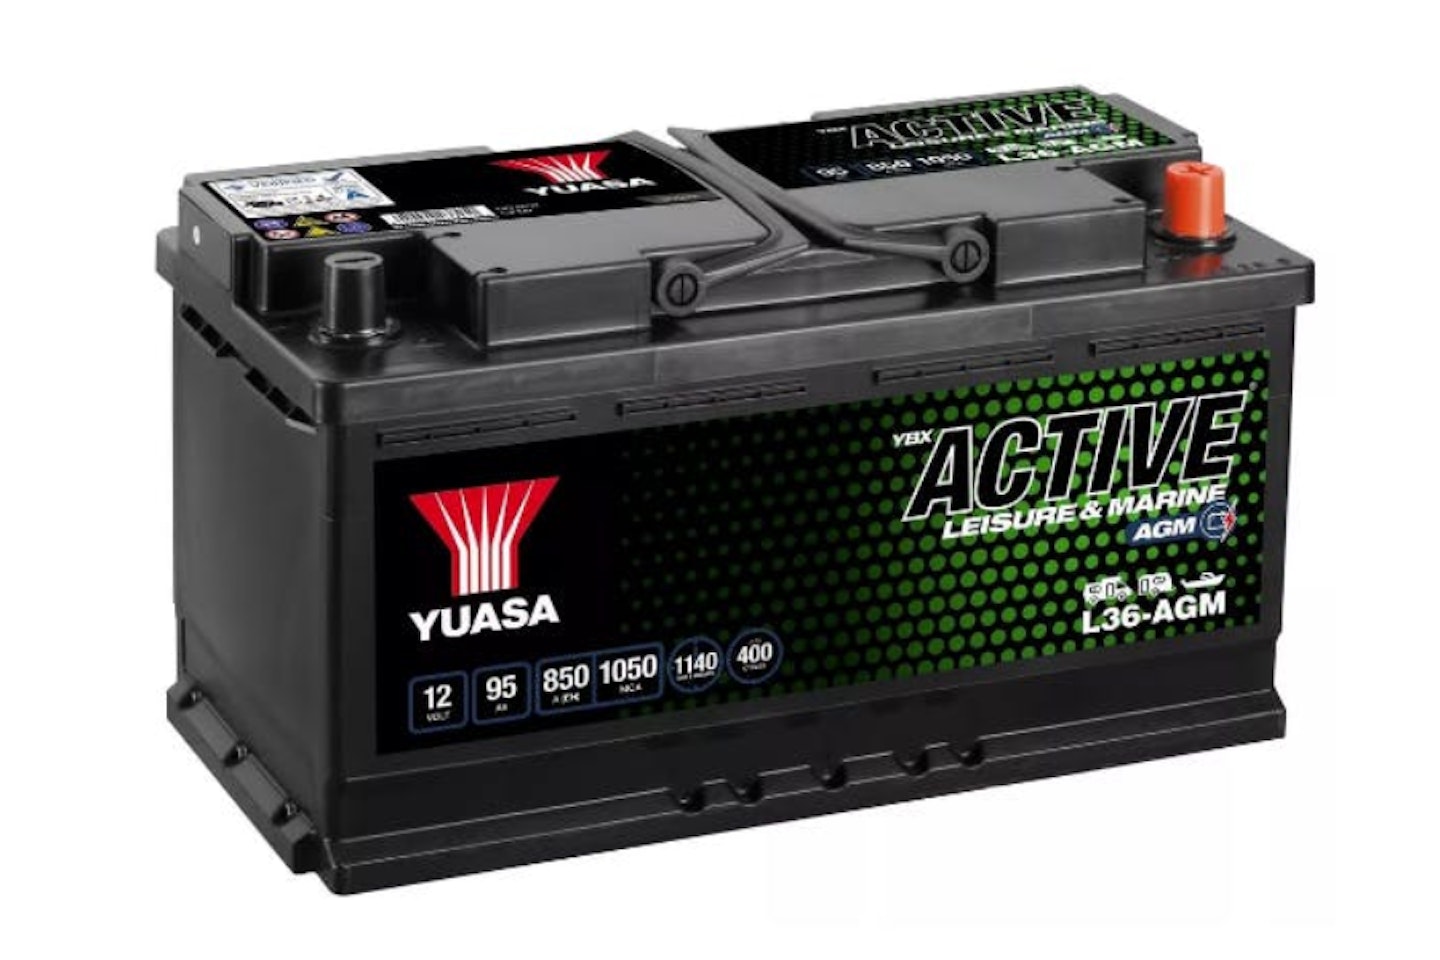 Yuasa L36-AGM 95Ah Active Leisure Battery